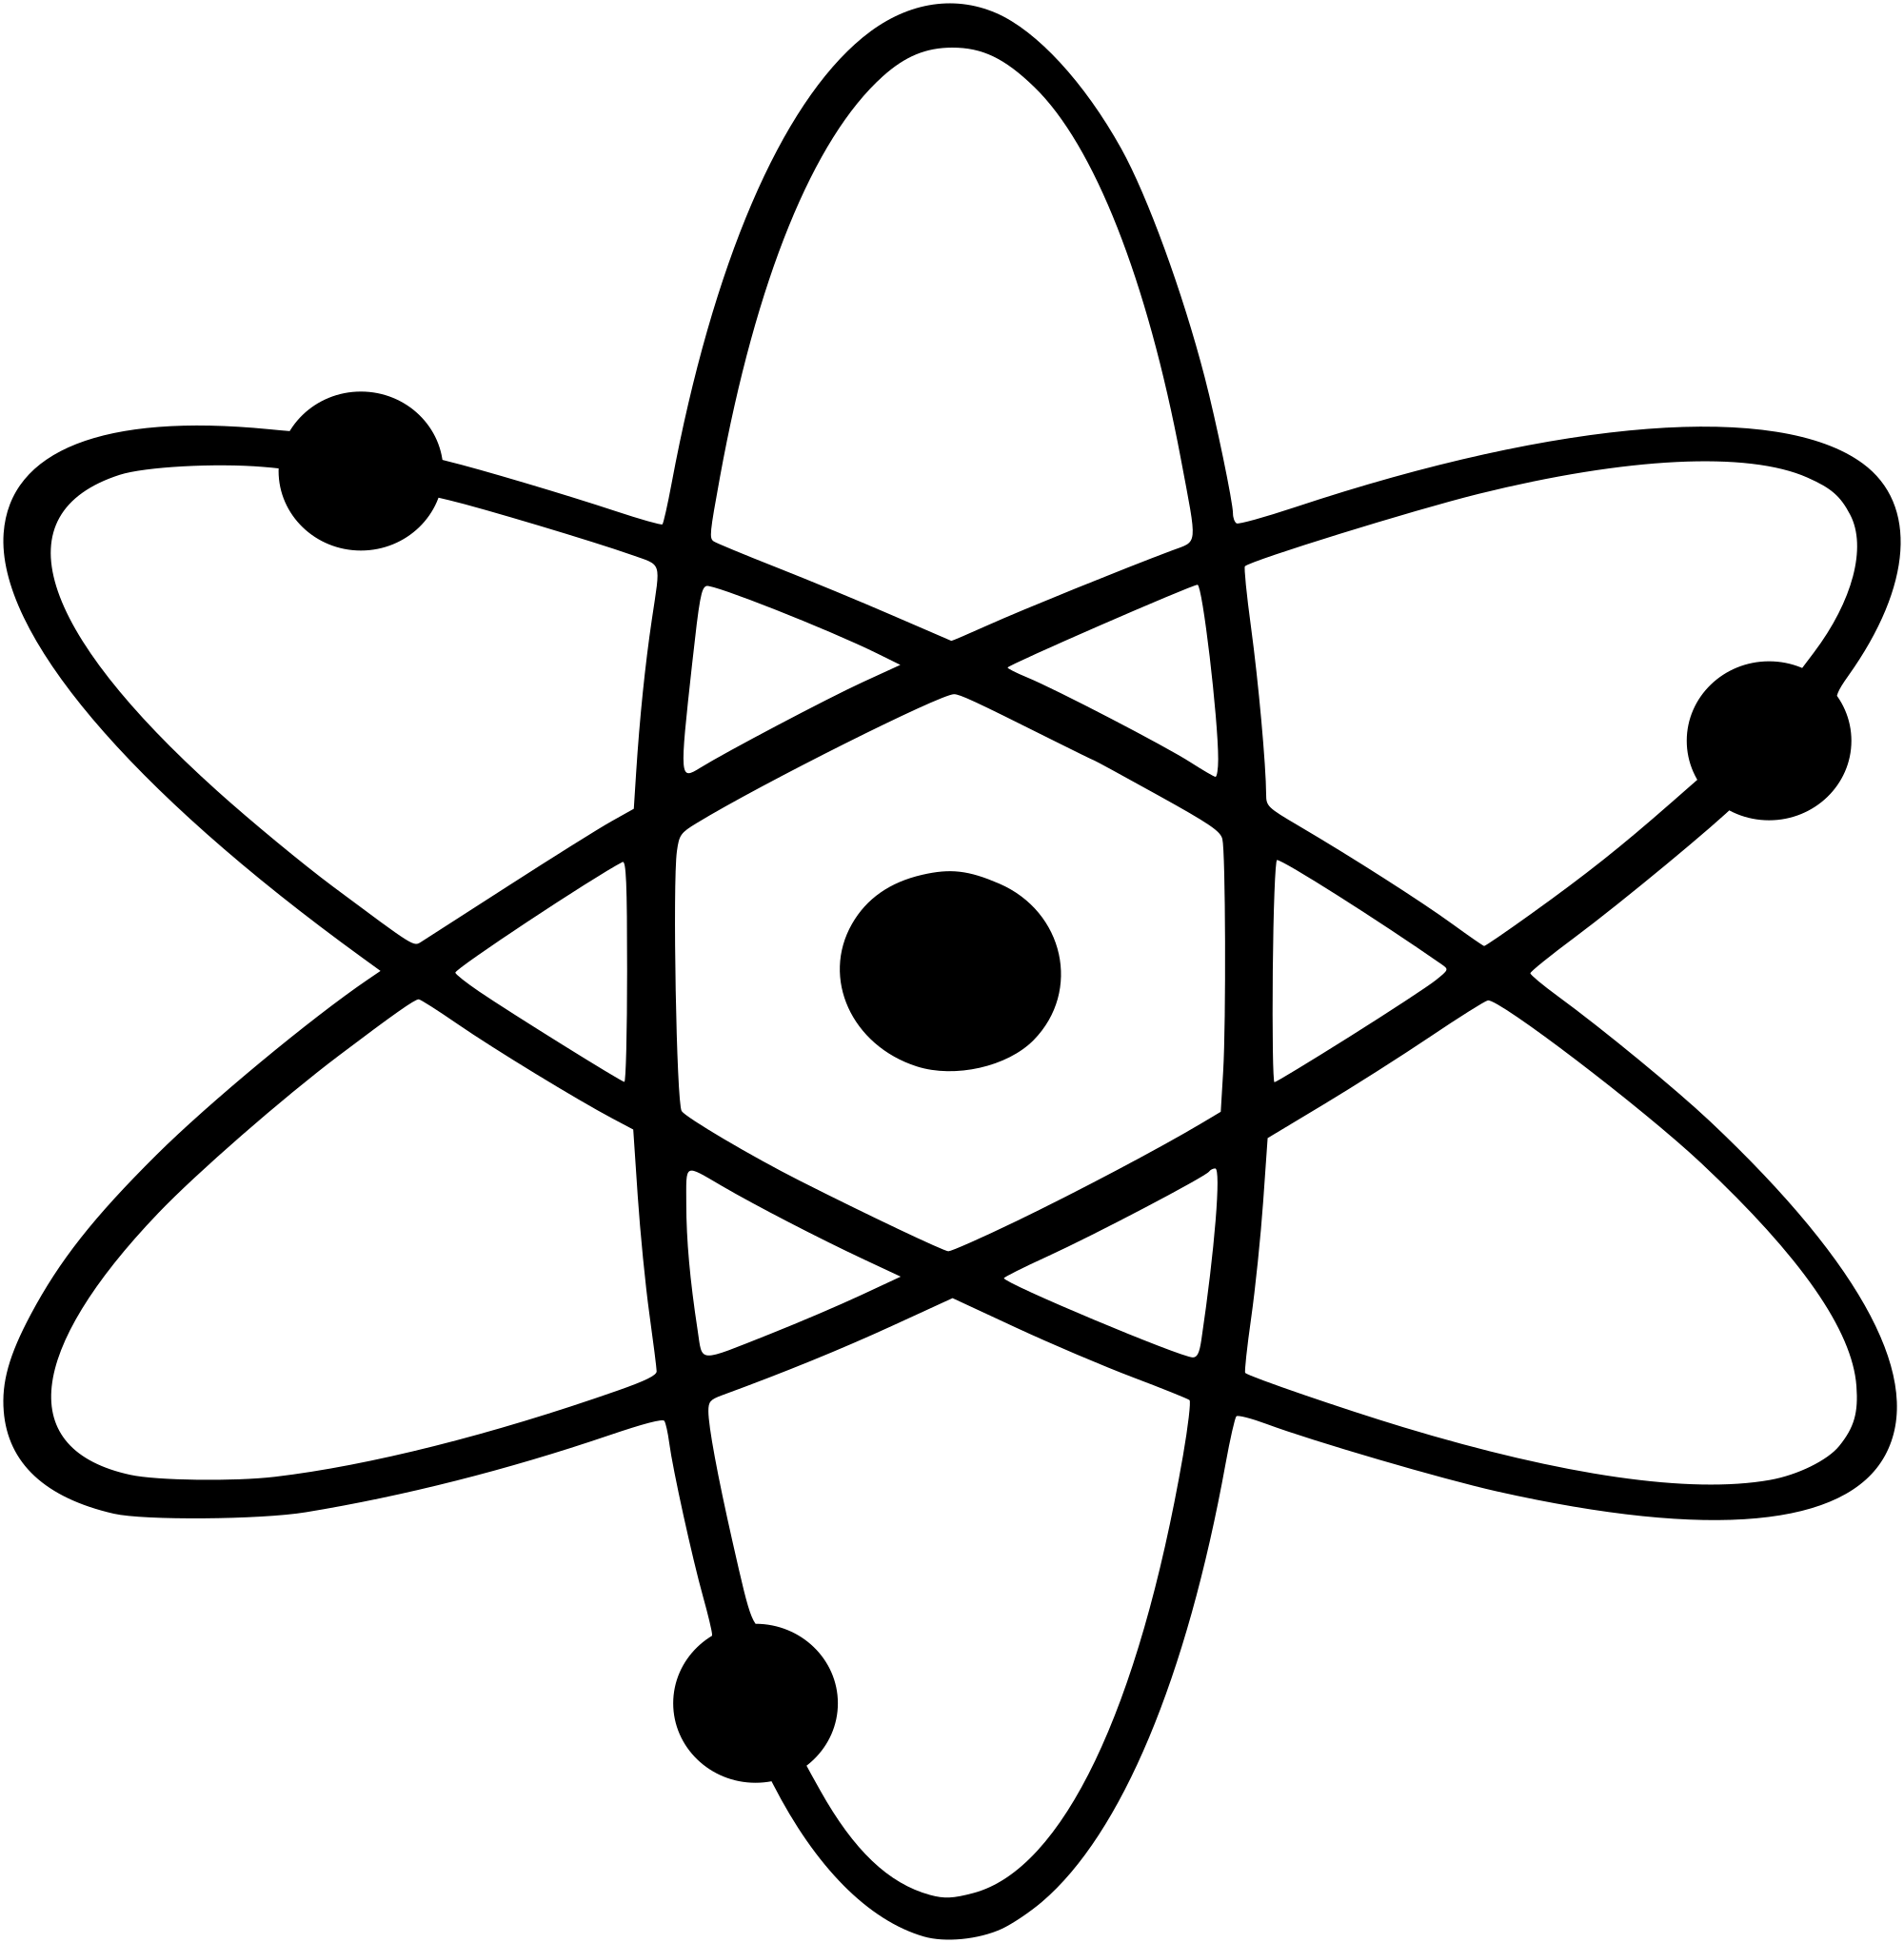 Big Bang Logo - Atom symbol as used in the logo of the television series